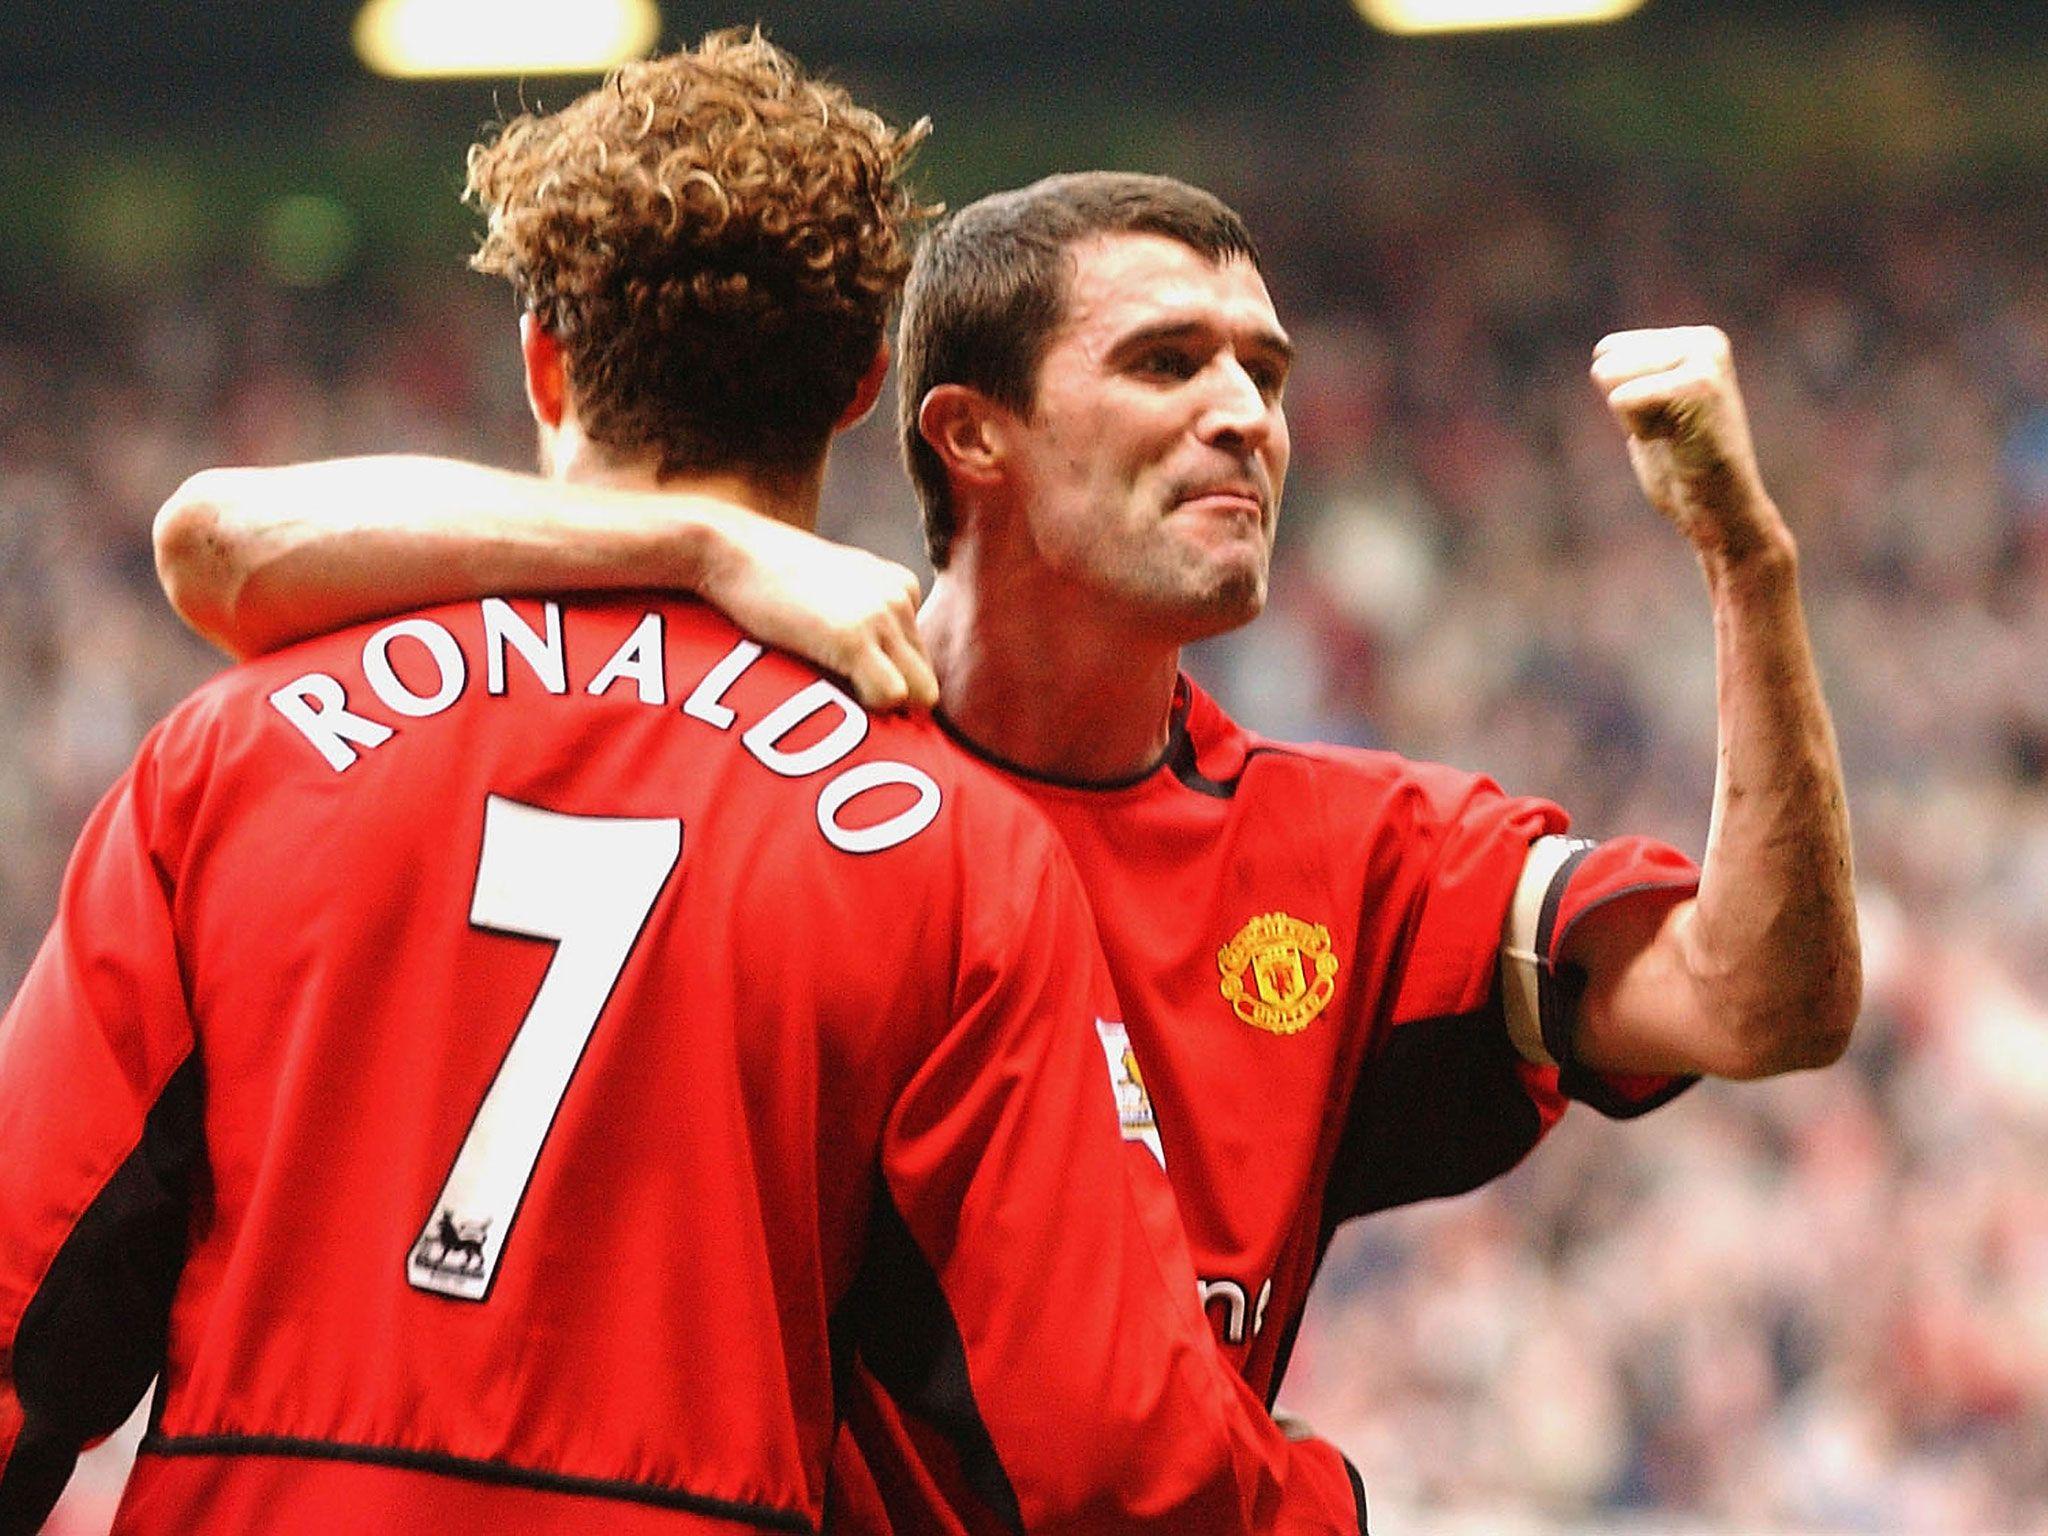 Roy Keane says he 'made' Cristiano Ronaldo, former Manchester United captain makes joke